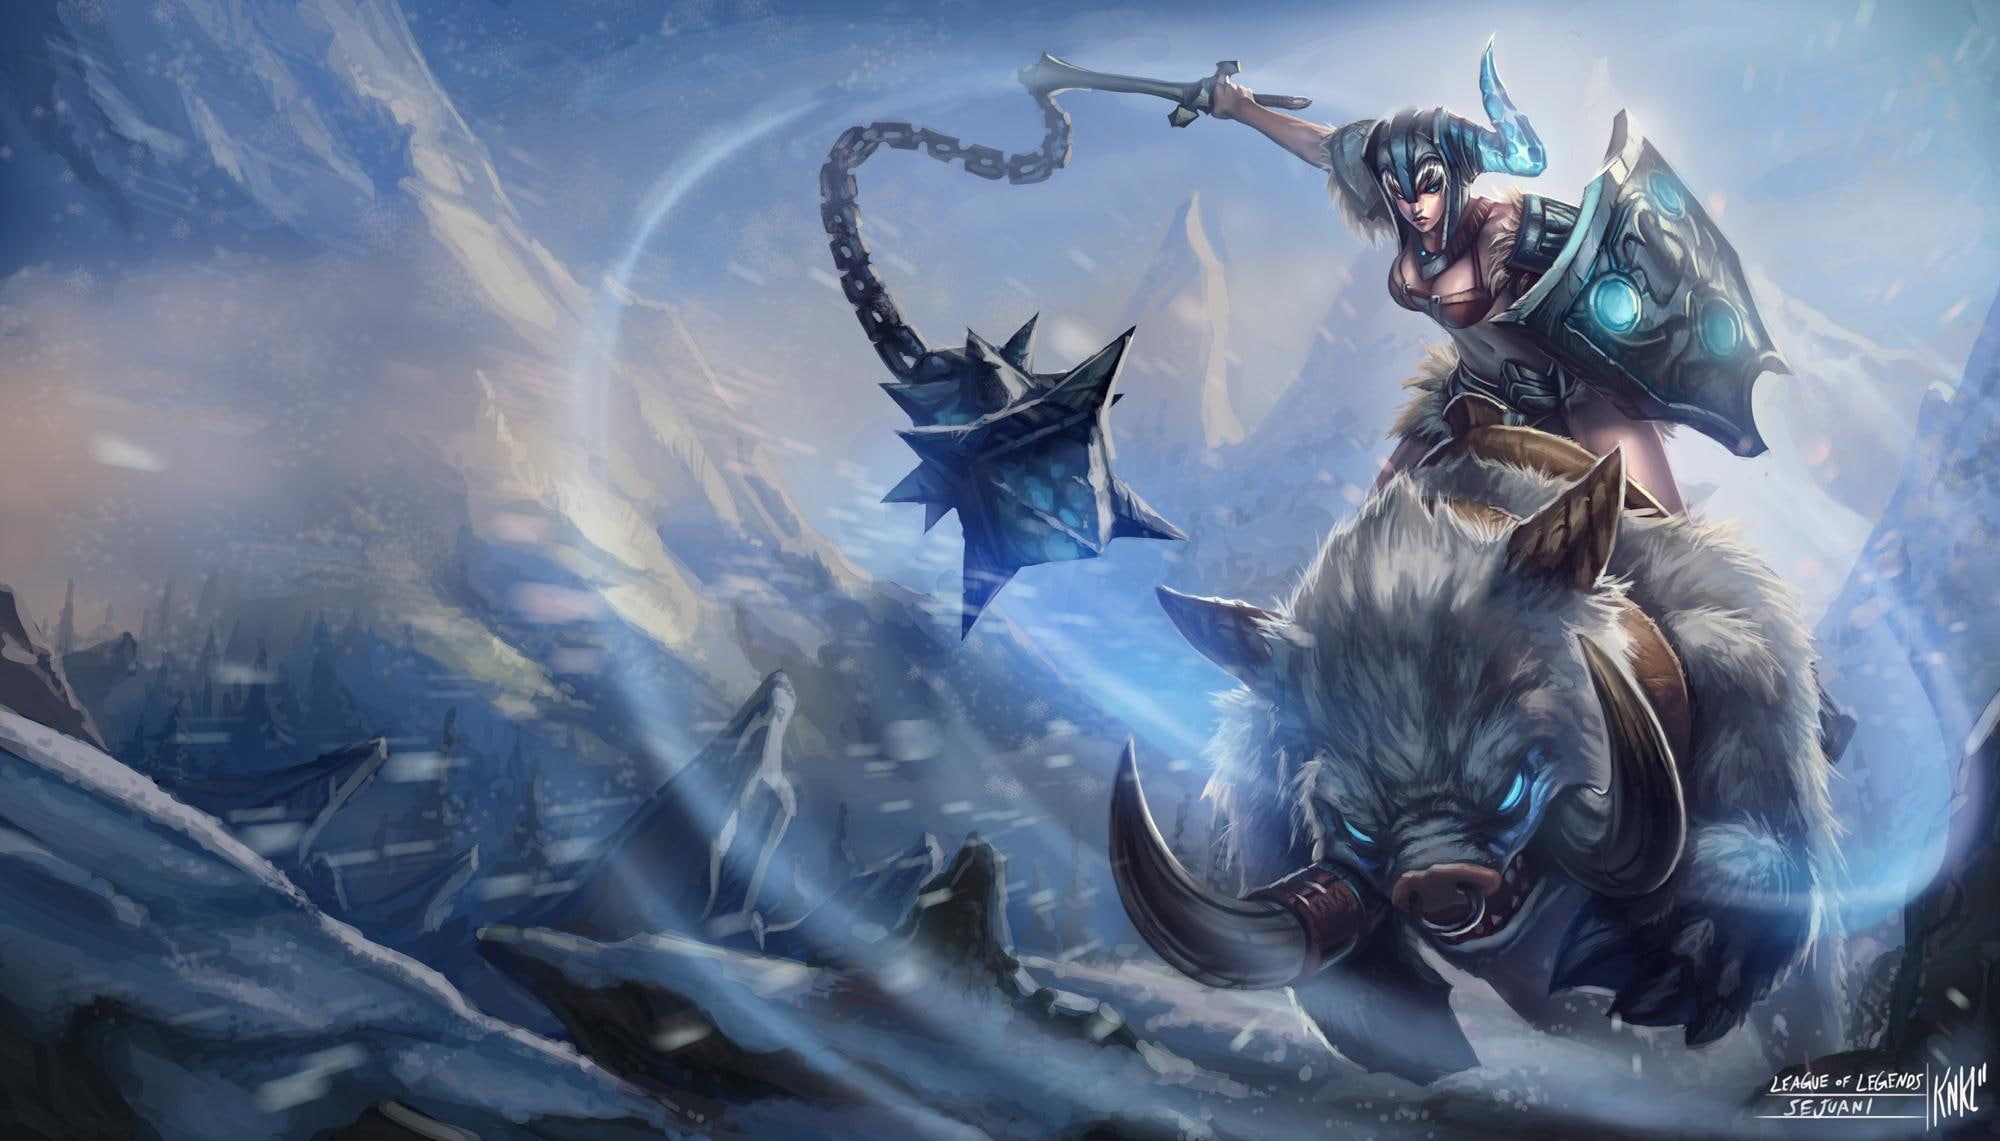 Sejuani, video games, boar, snow, shield, league of legends, weapon